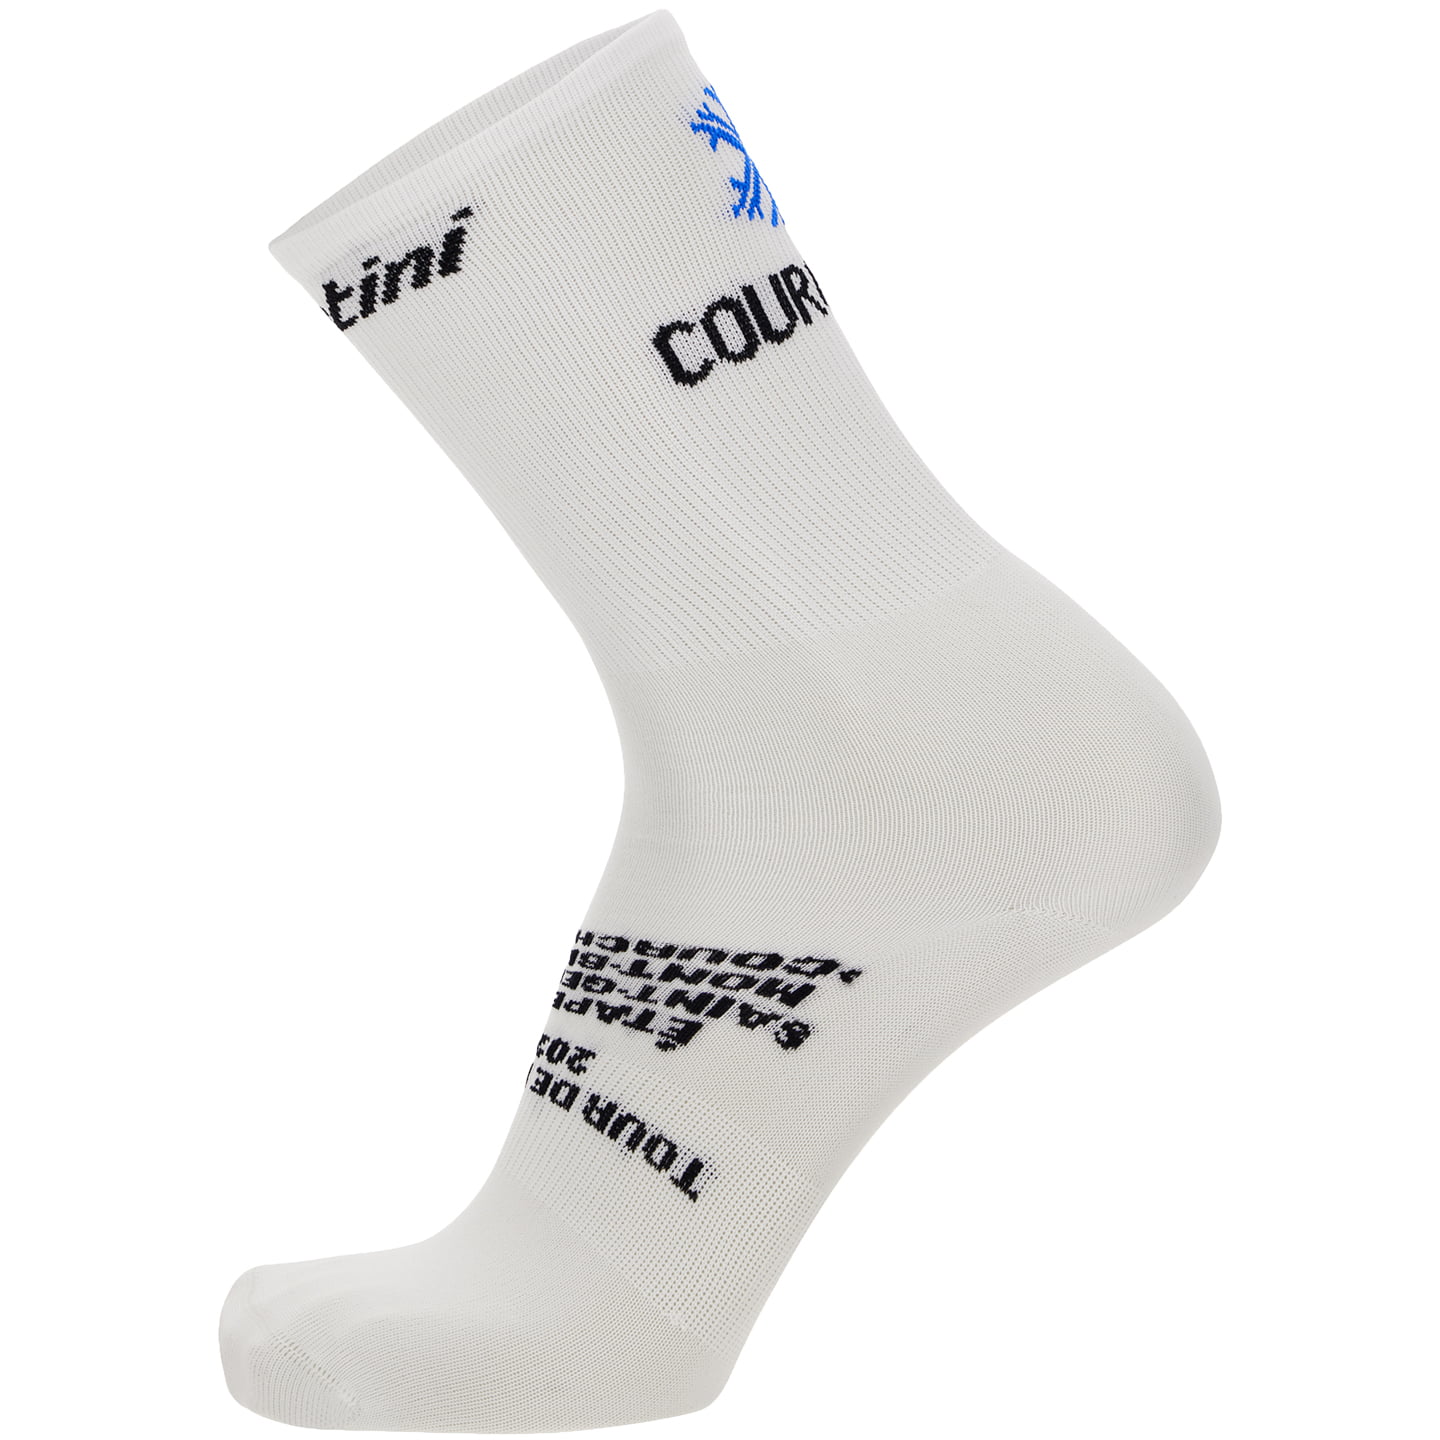 TOUR DE FRANCE Mont Blanc-Courchevel 2023 Cycling Socks, for men, size XL, MTB socks, Cycling clothes